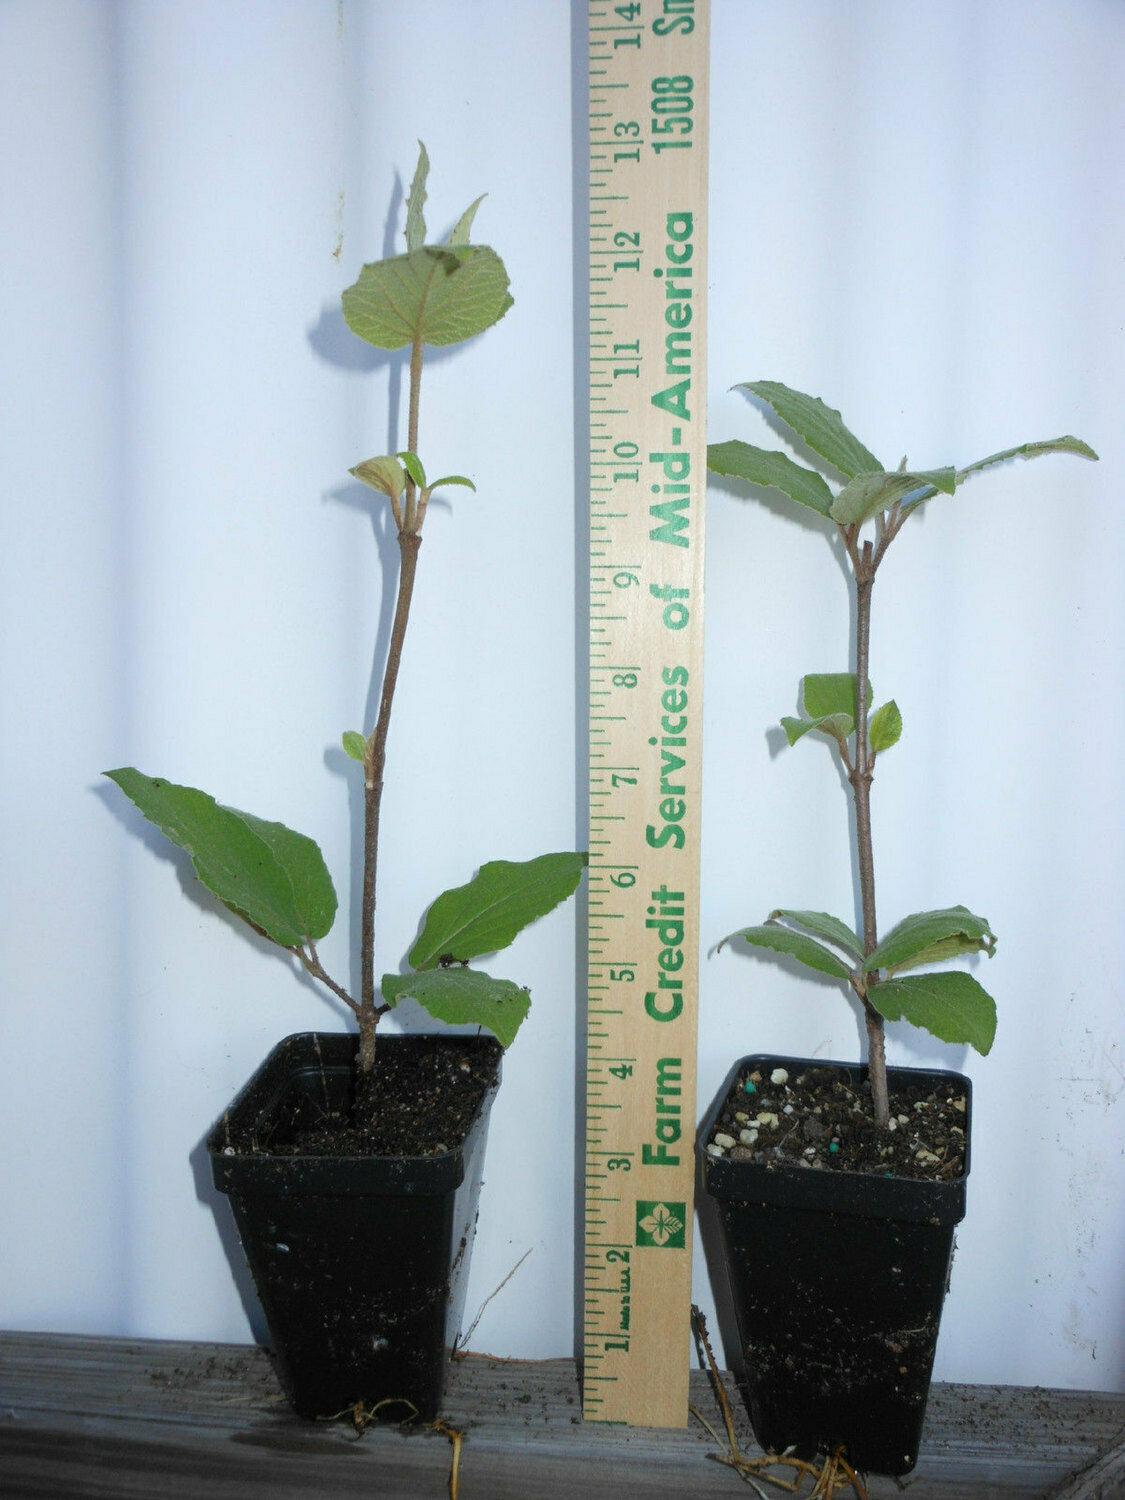 Juddi Viburnum Shrub - Live Potted Plant, 6-12" Tall, 3" Pot - Viburnum x Juddii - The Nursery Center